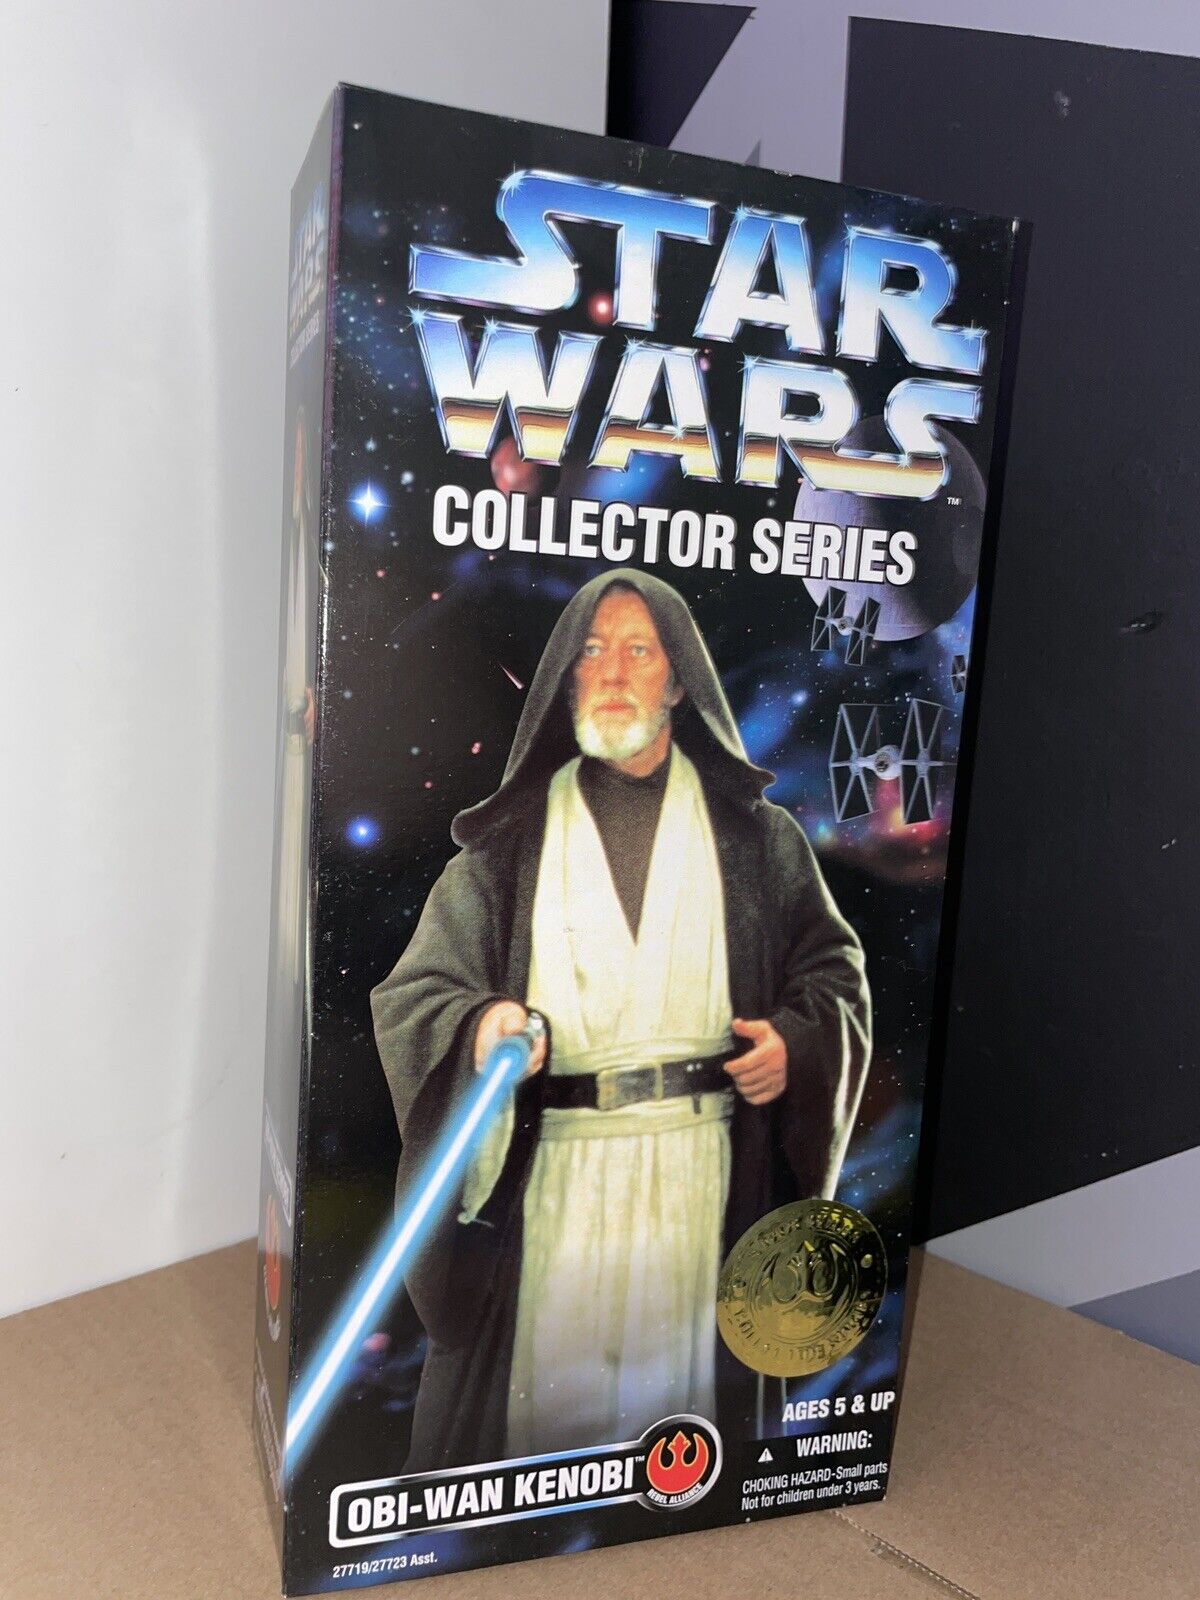 Star Wars Collector Series Obi-Wan Kenobi 12-inch Figure 1996 dark blue backing.